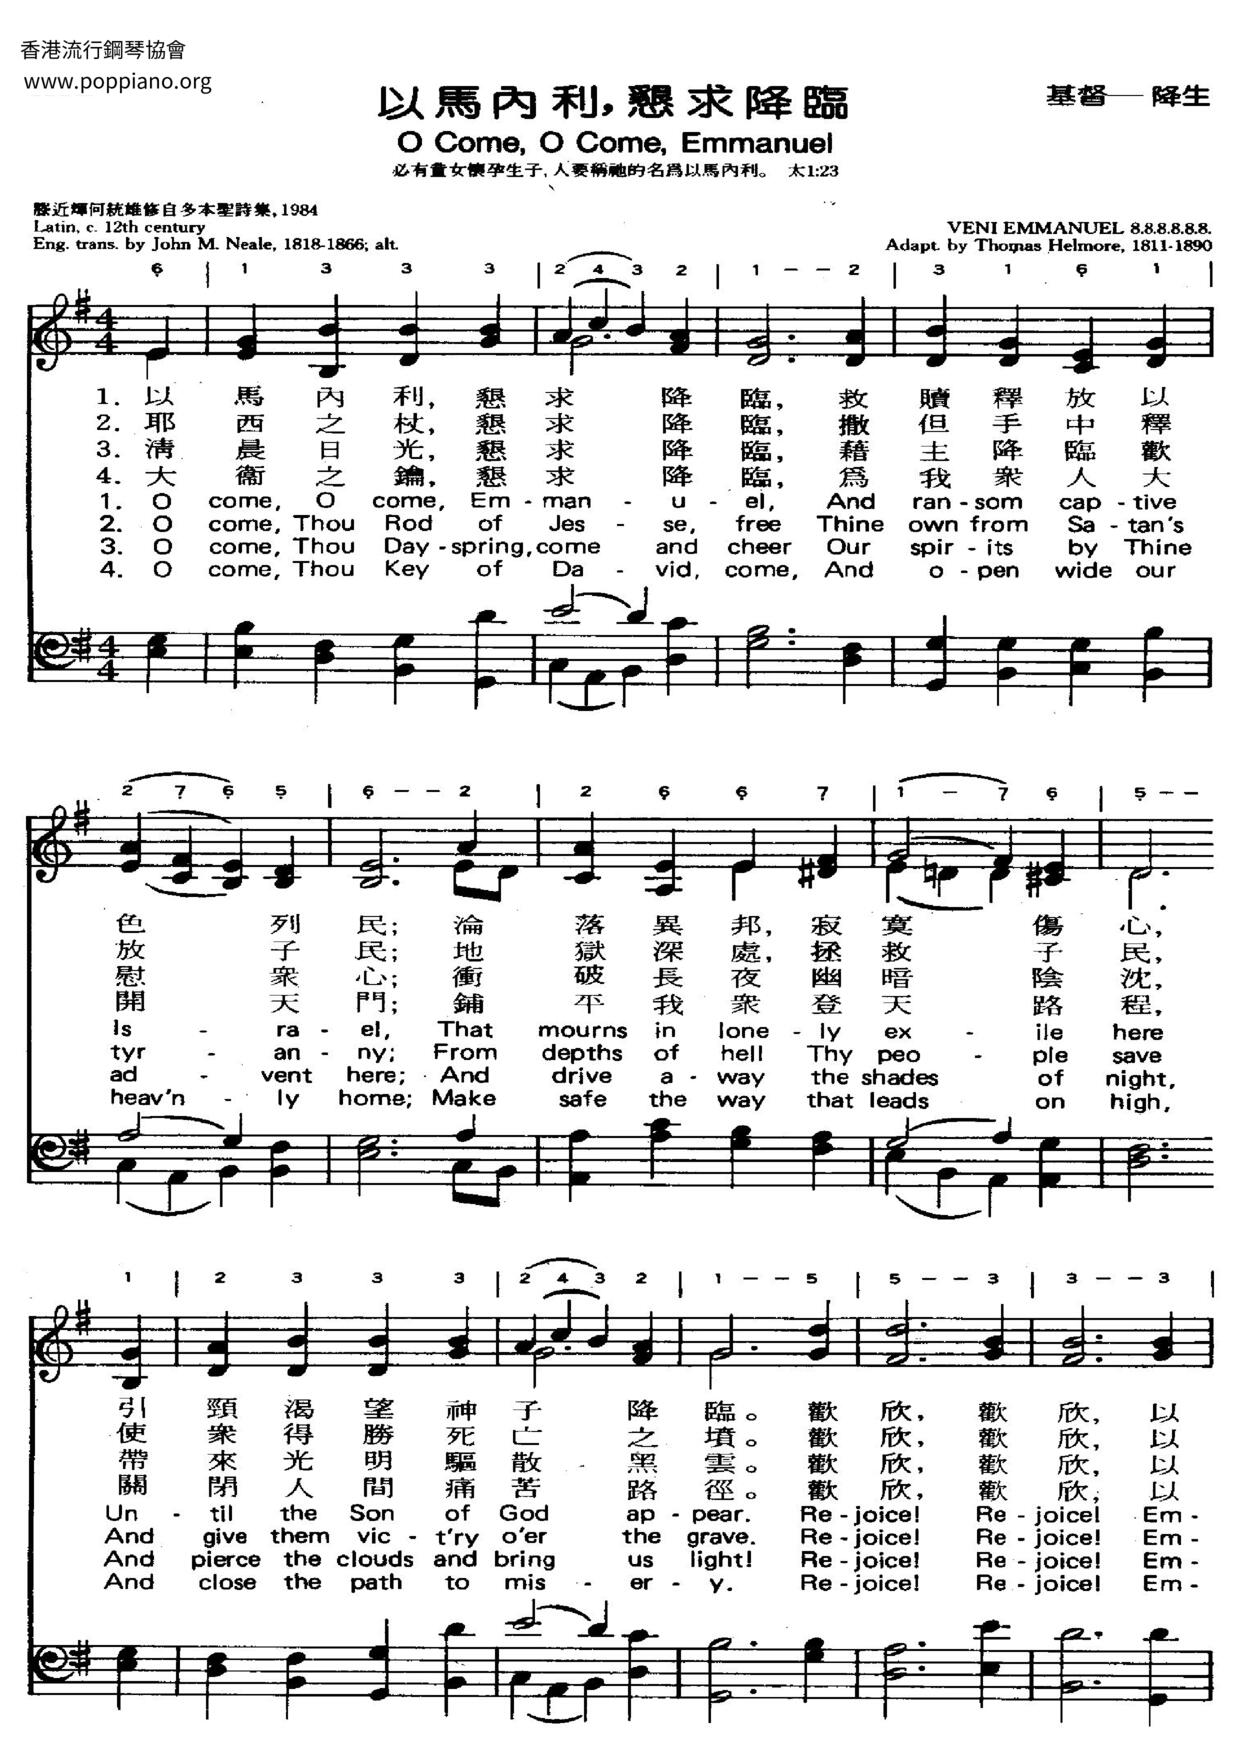 Immanuel, Advent Score